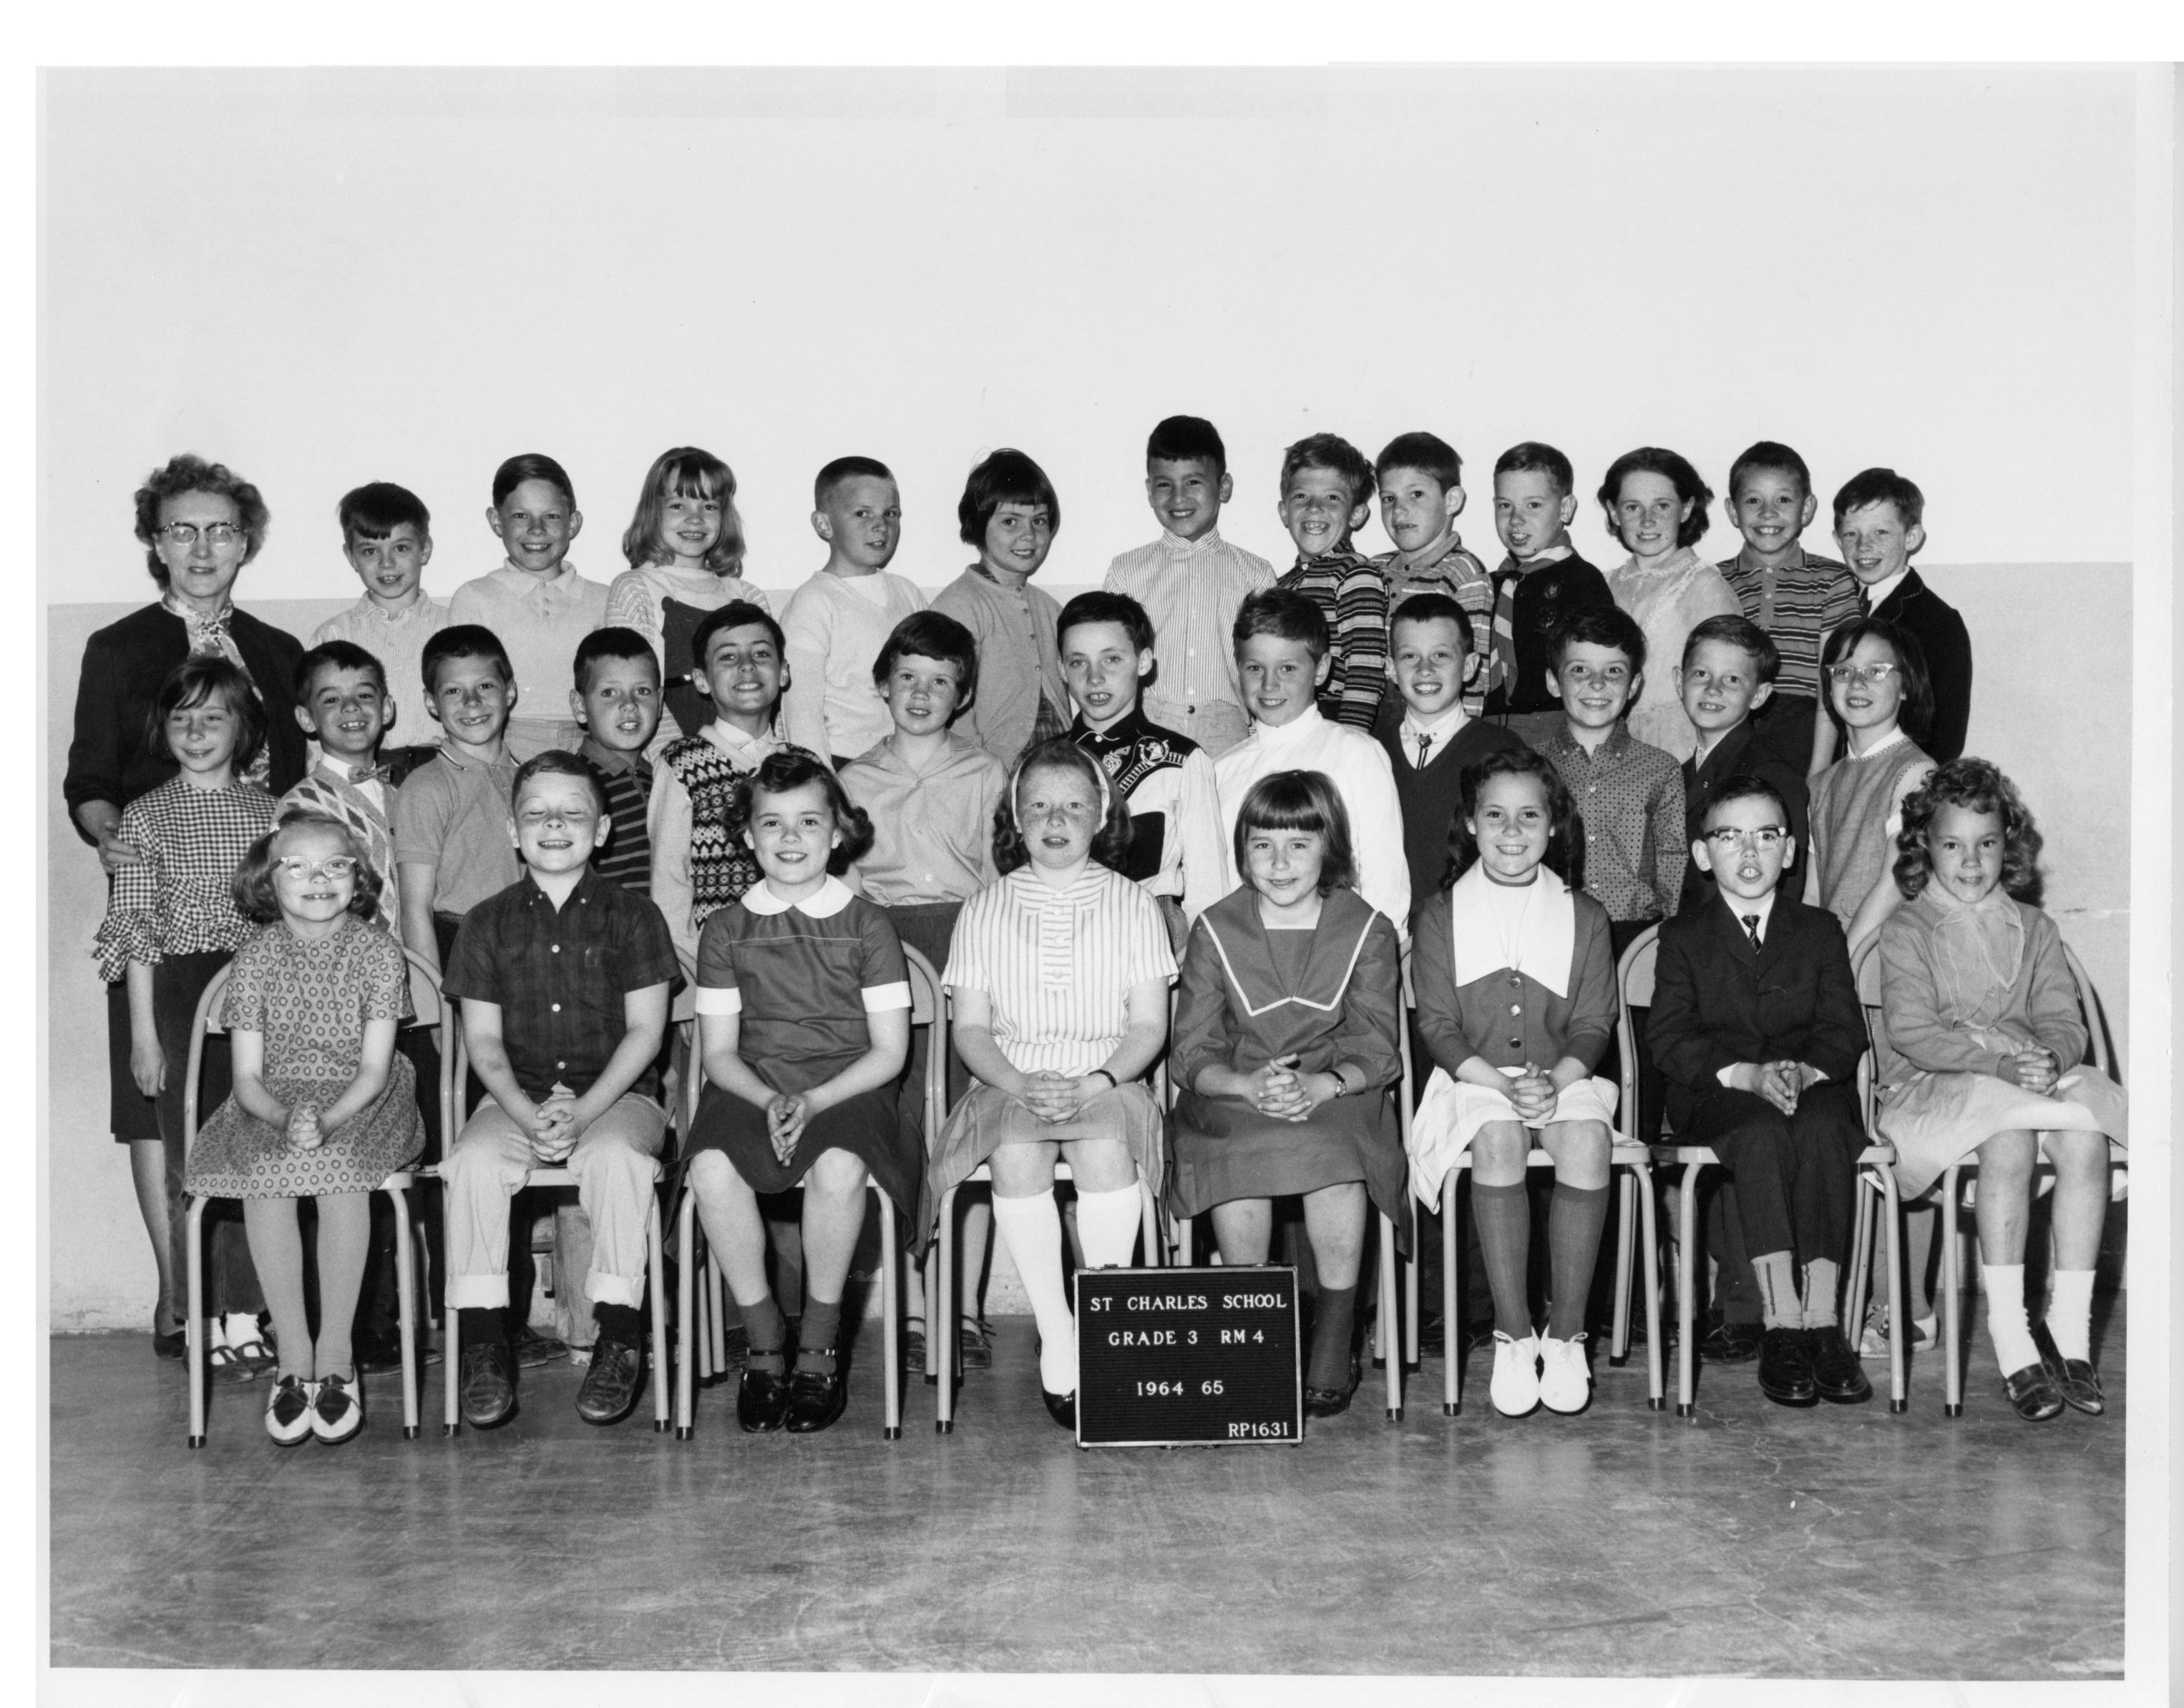 St. Charles School, Grade 3 1964-65